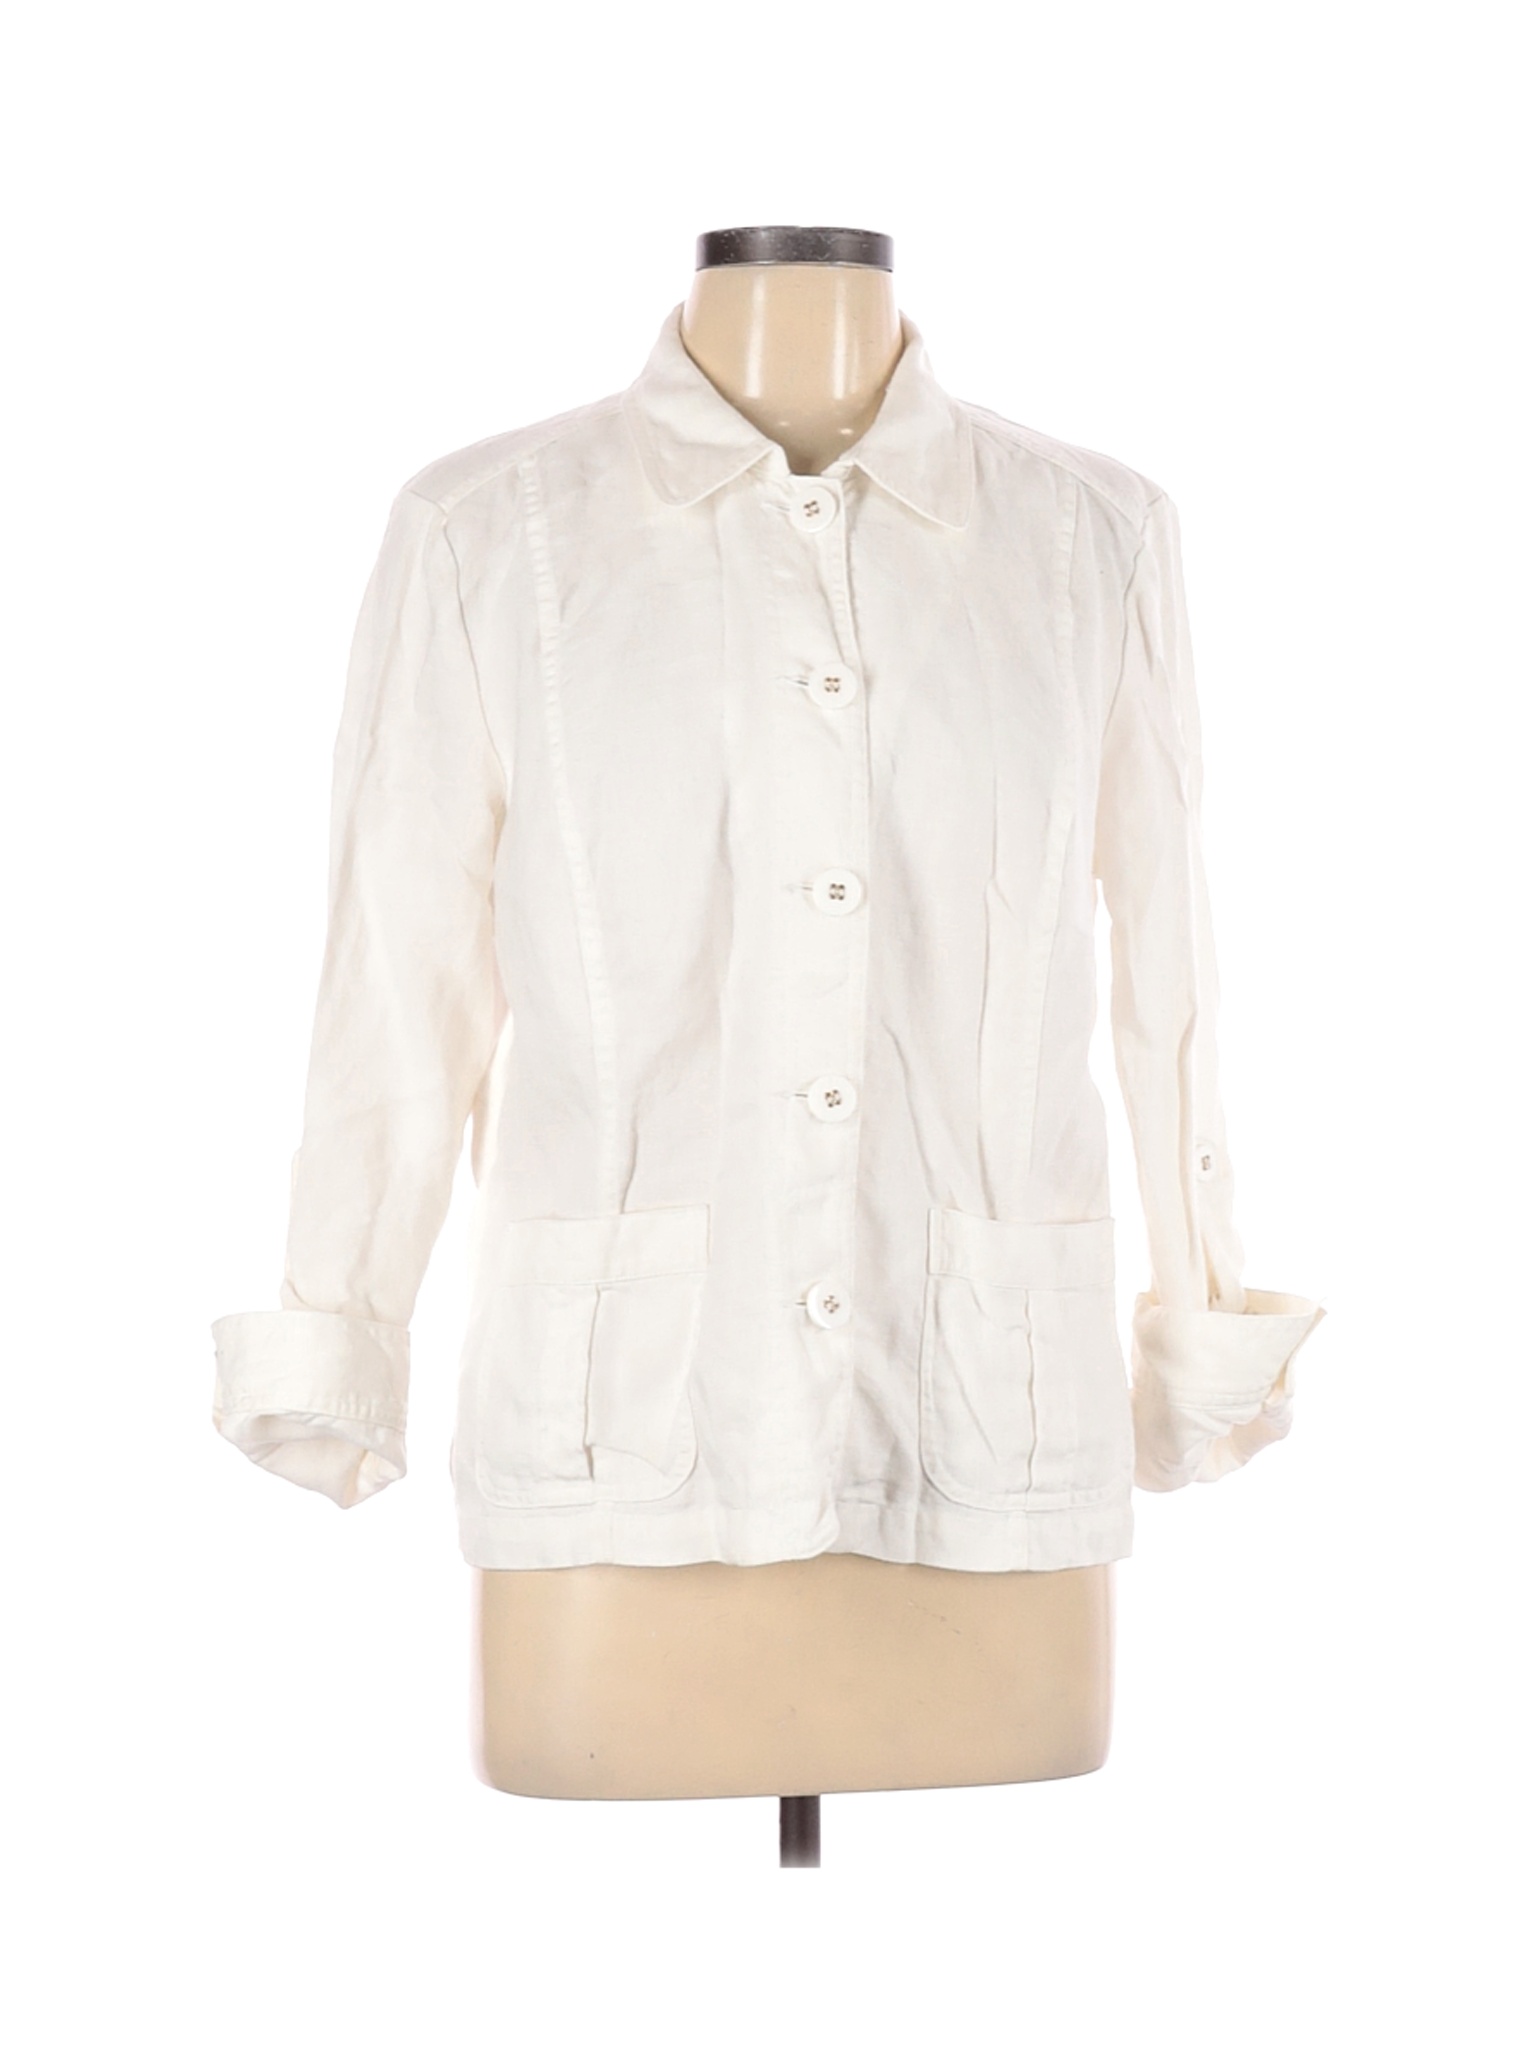 Charter Club Women White Jacket L | eBay